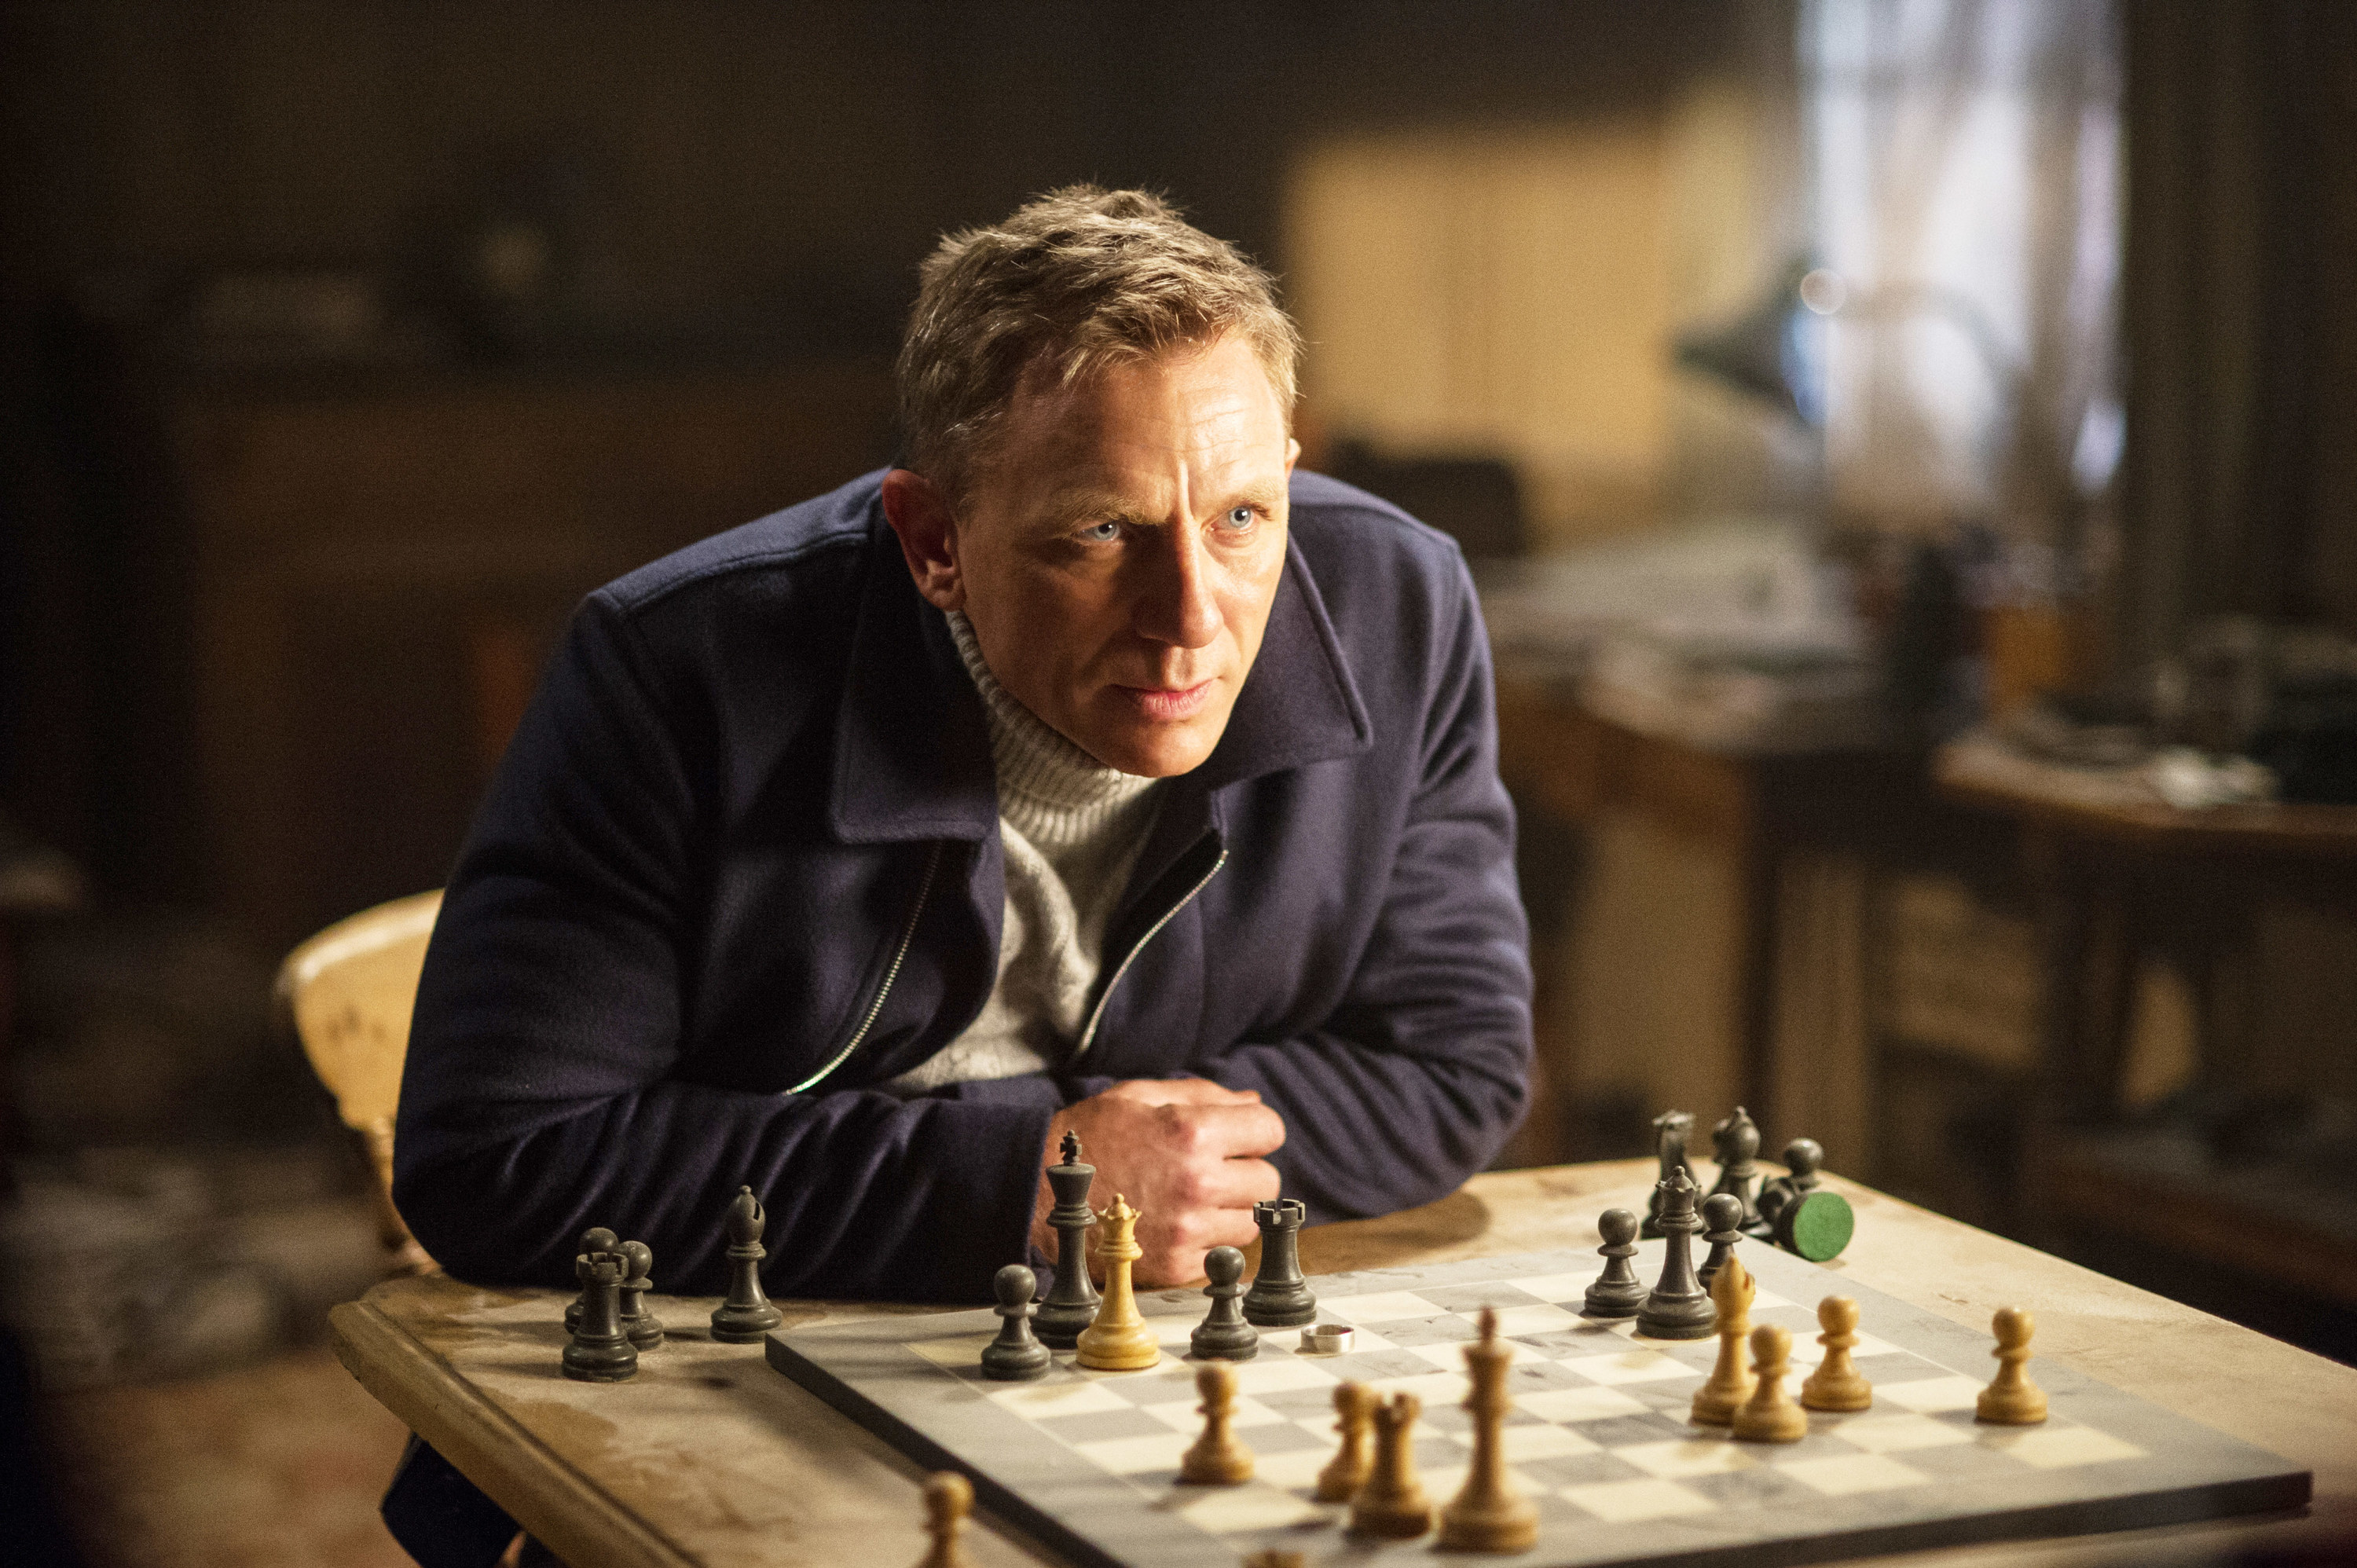 Daniel as Bond sitting at a chessboard